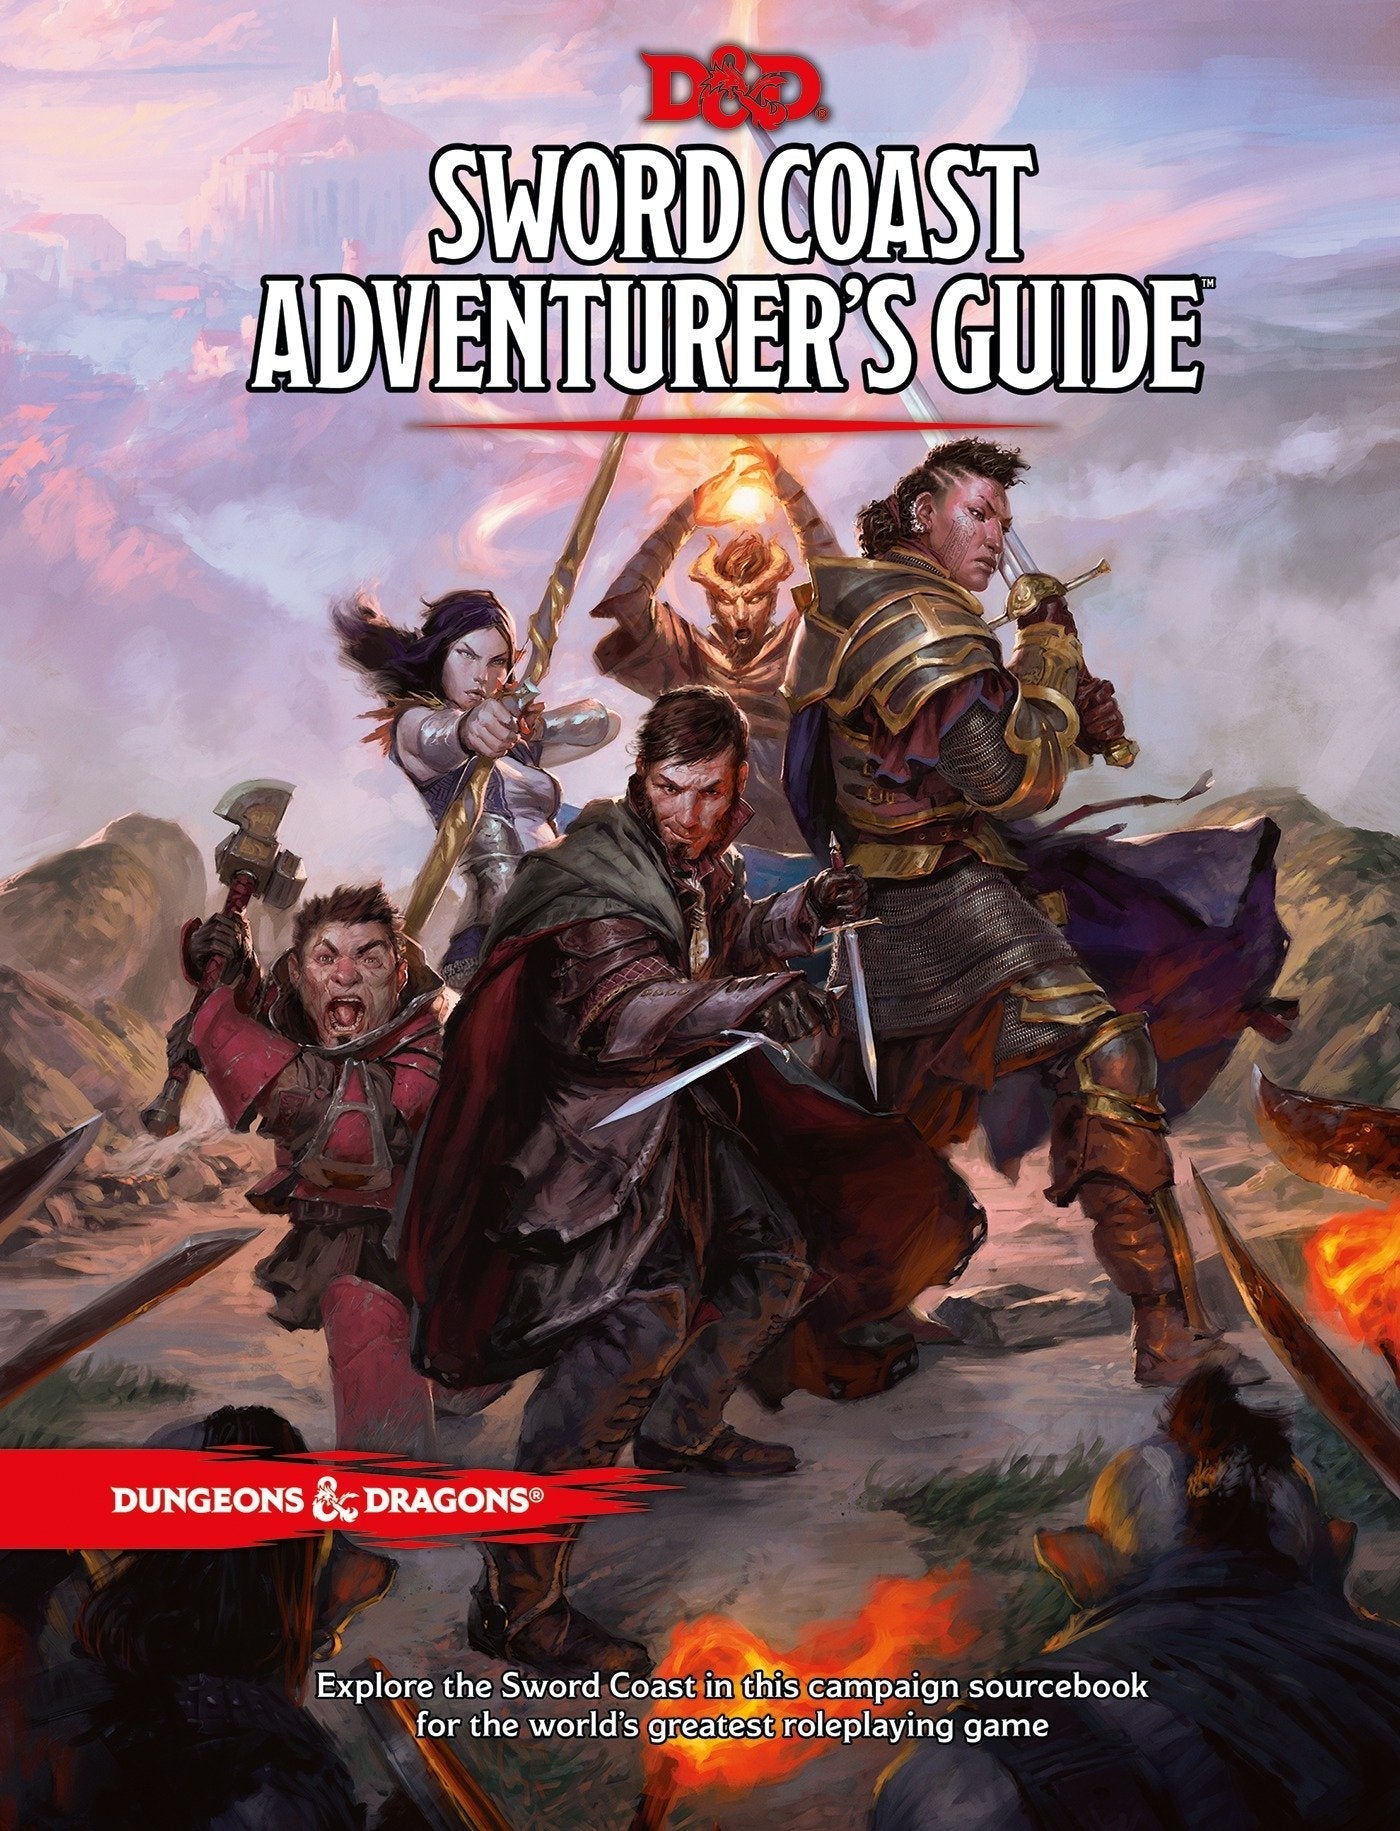 Sword Coast Adventurer's Guide (D&D Adventure) - Bards & Cards